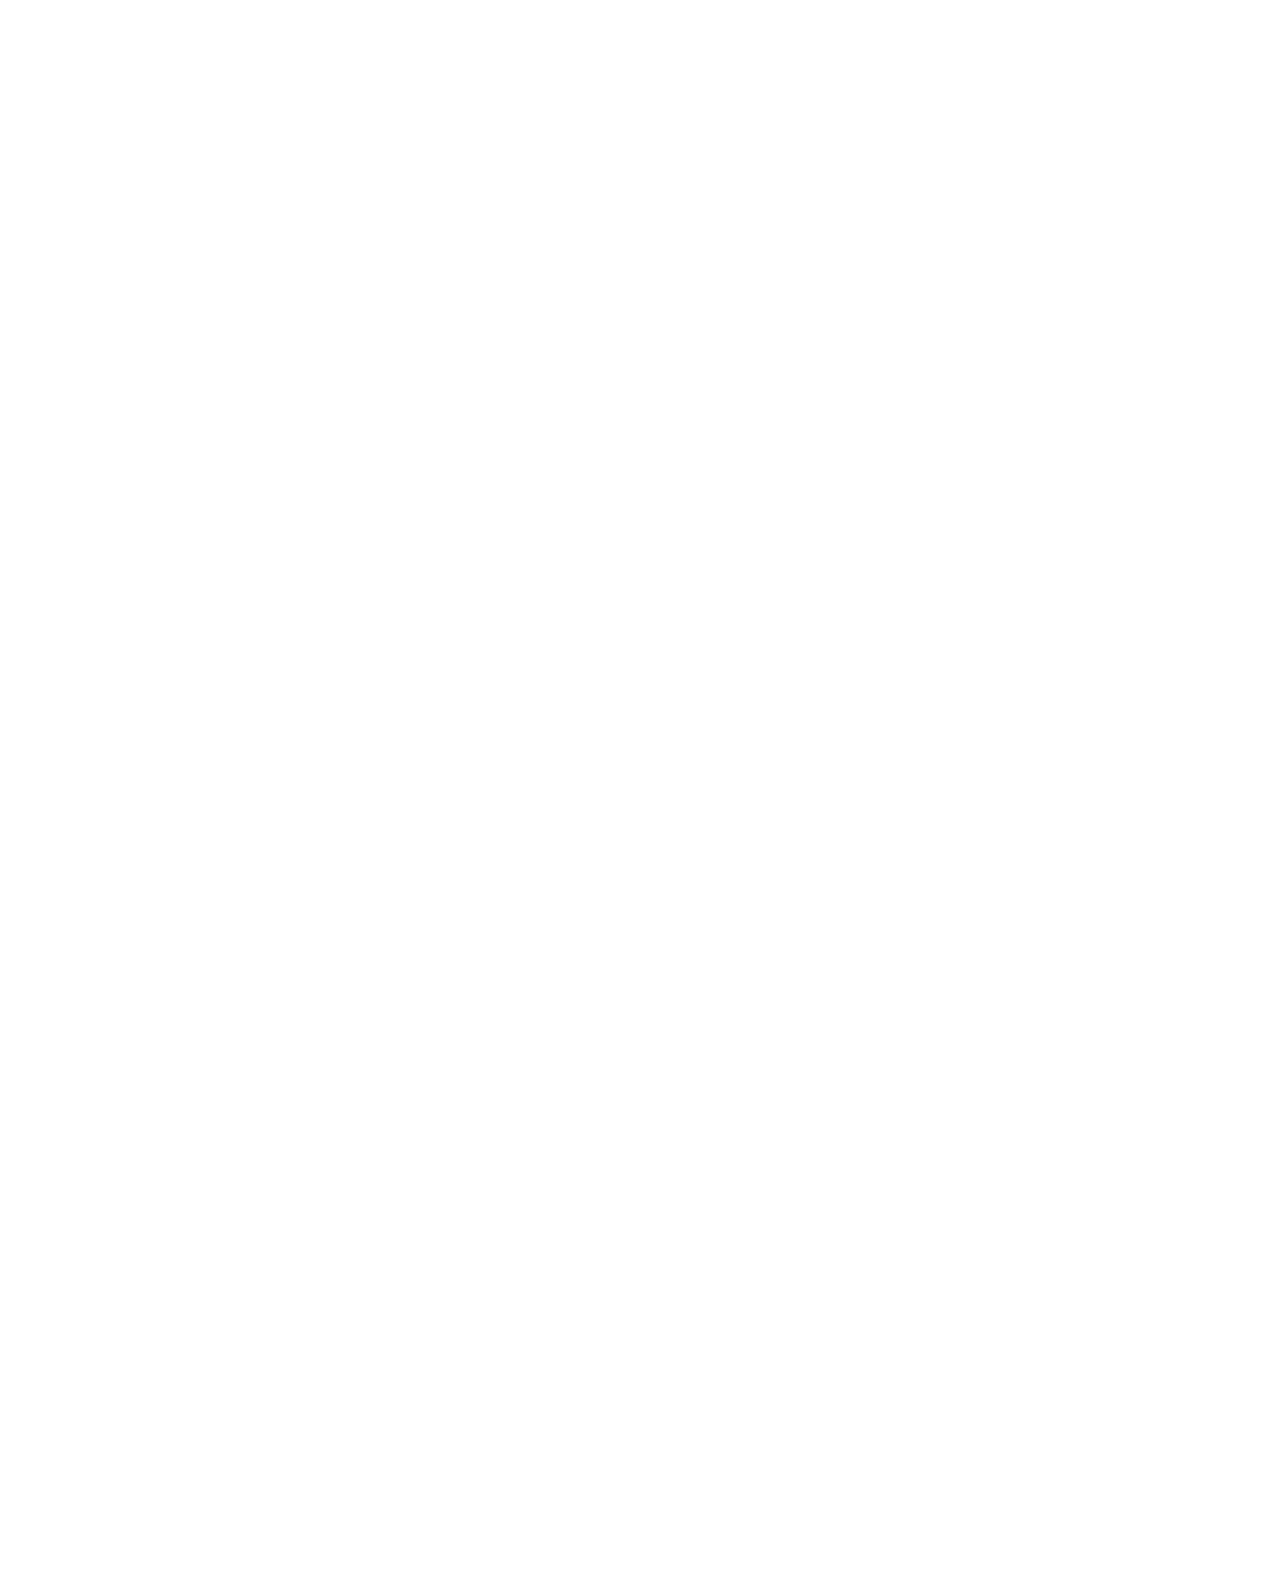 Industrie De Nora logo for dark backgrounds (transparent PNG)